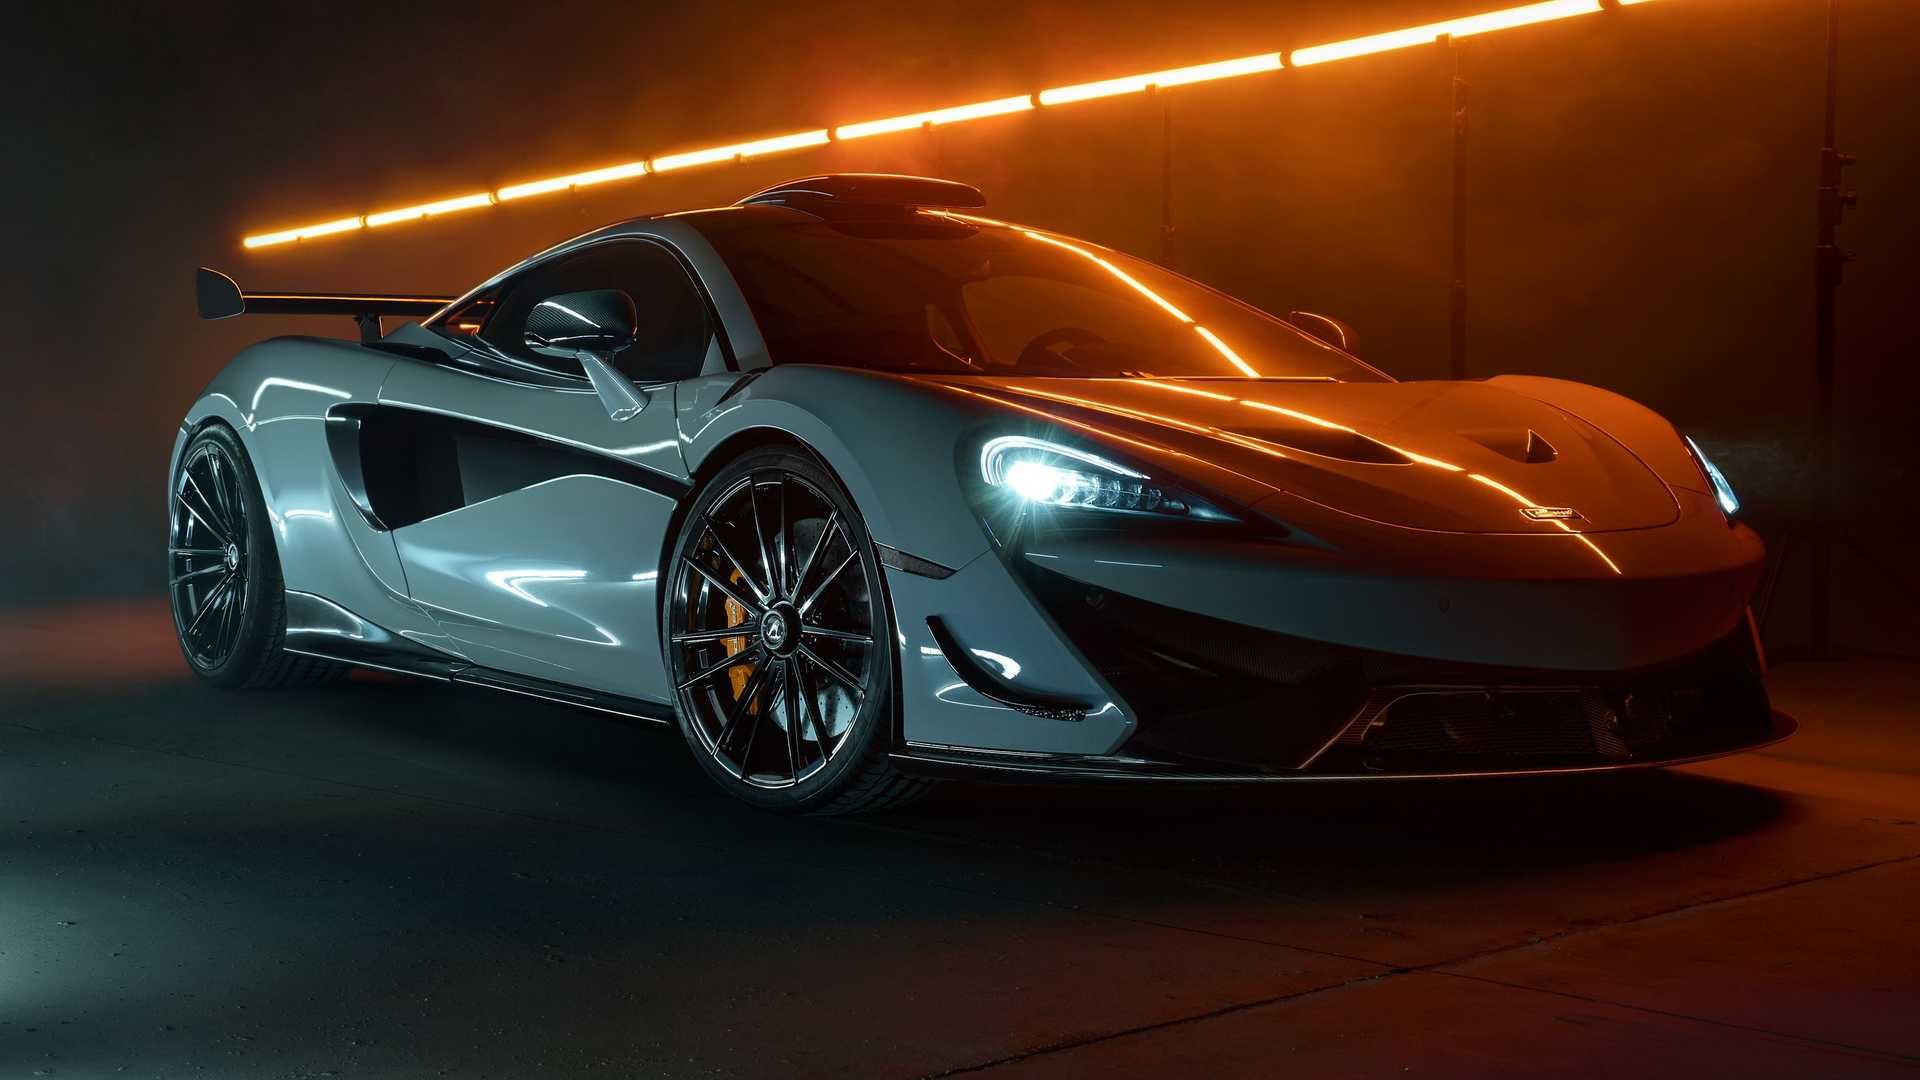 McLaren lit up at night